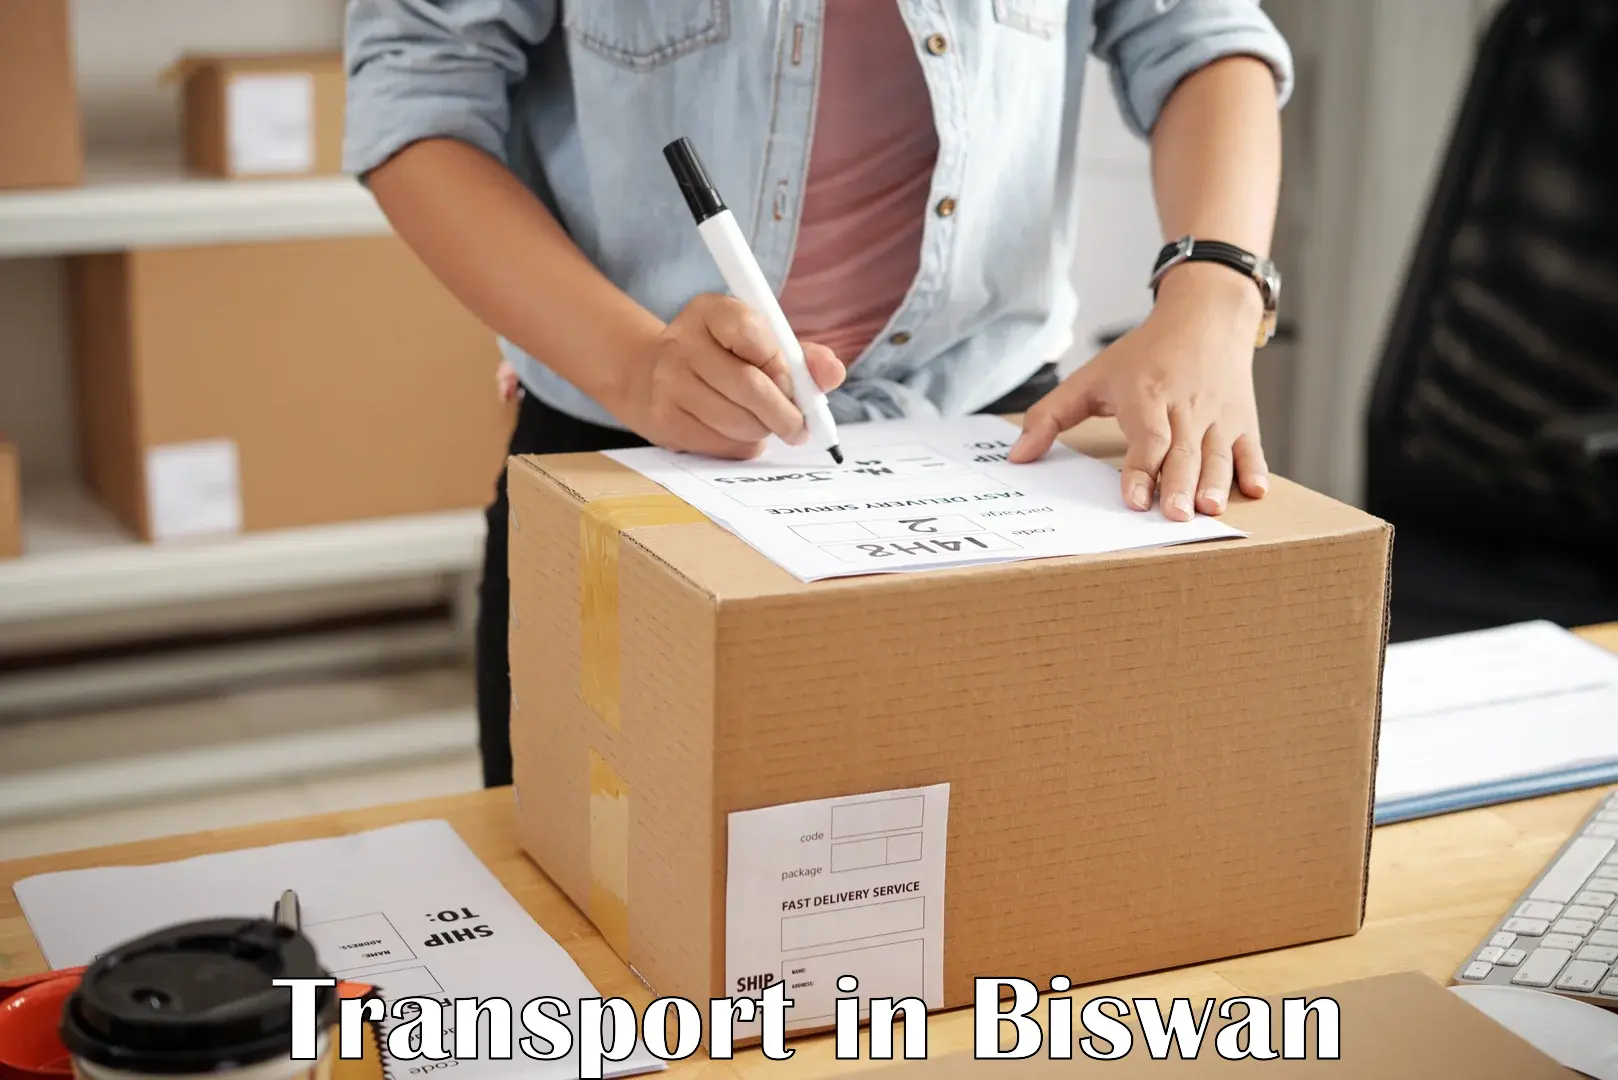 Two wheeler parcel service in Biswan